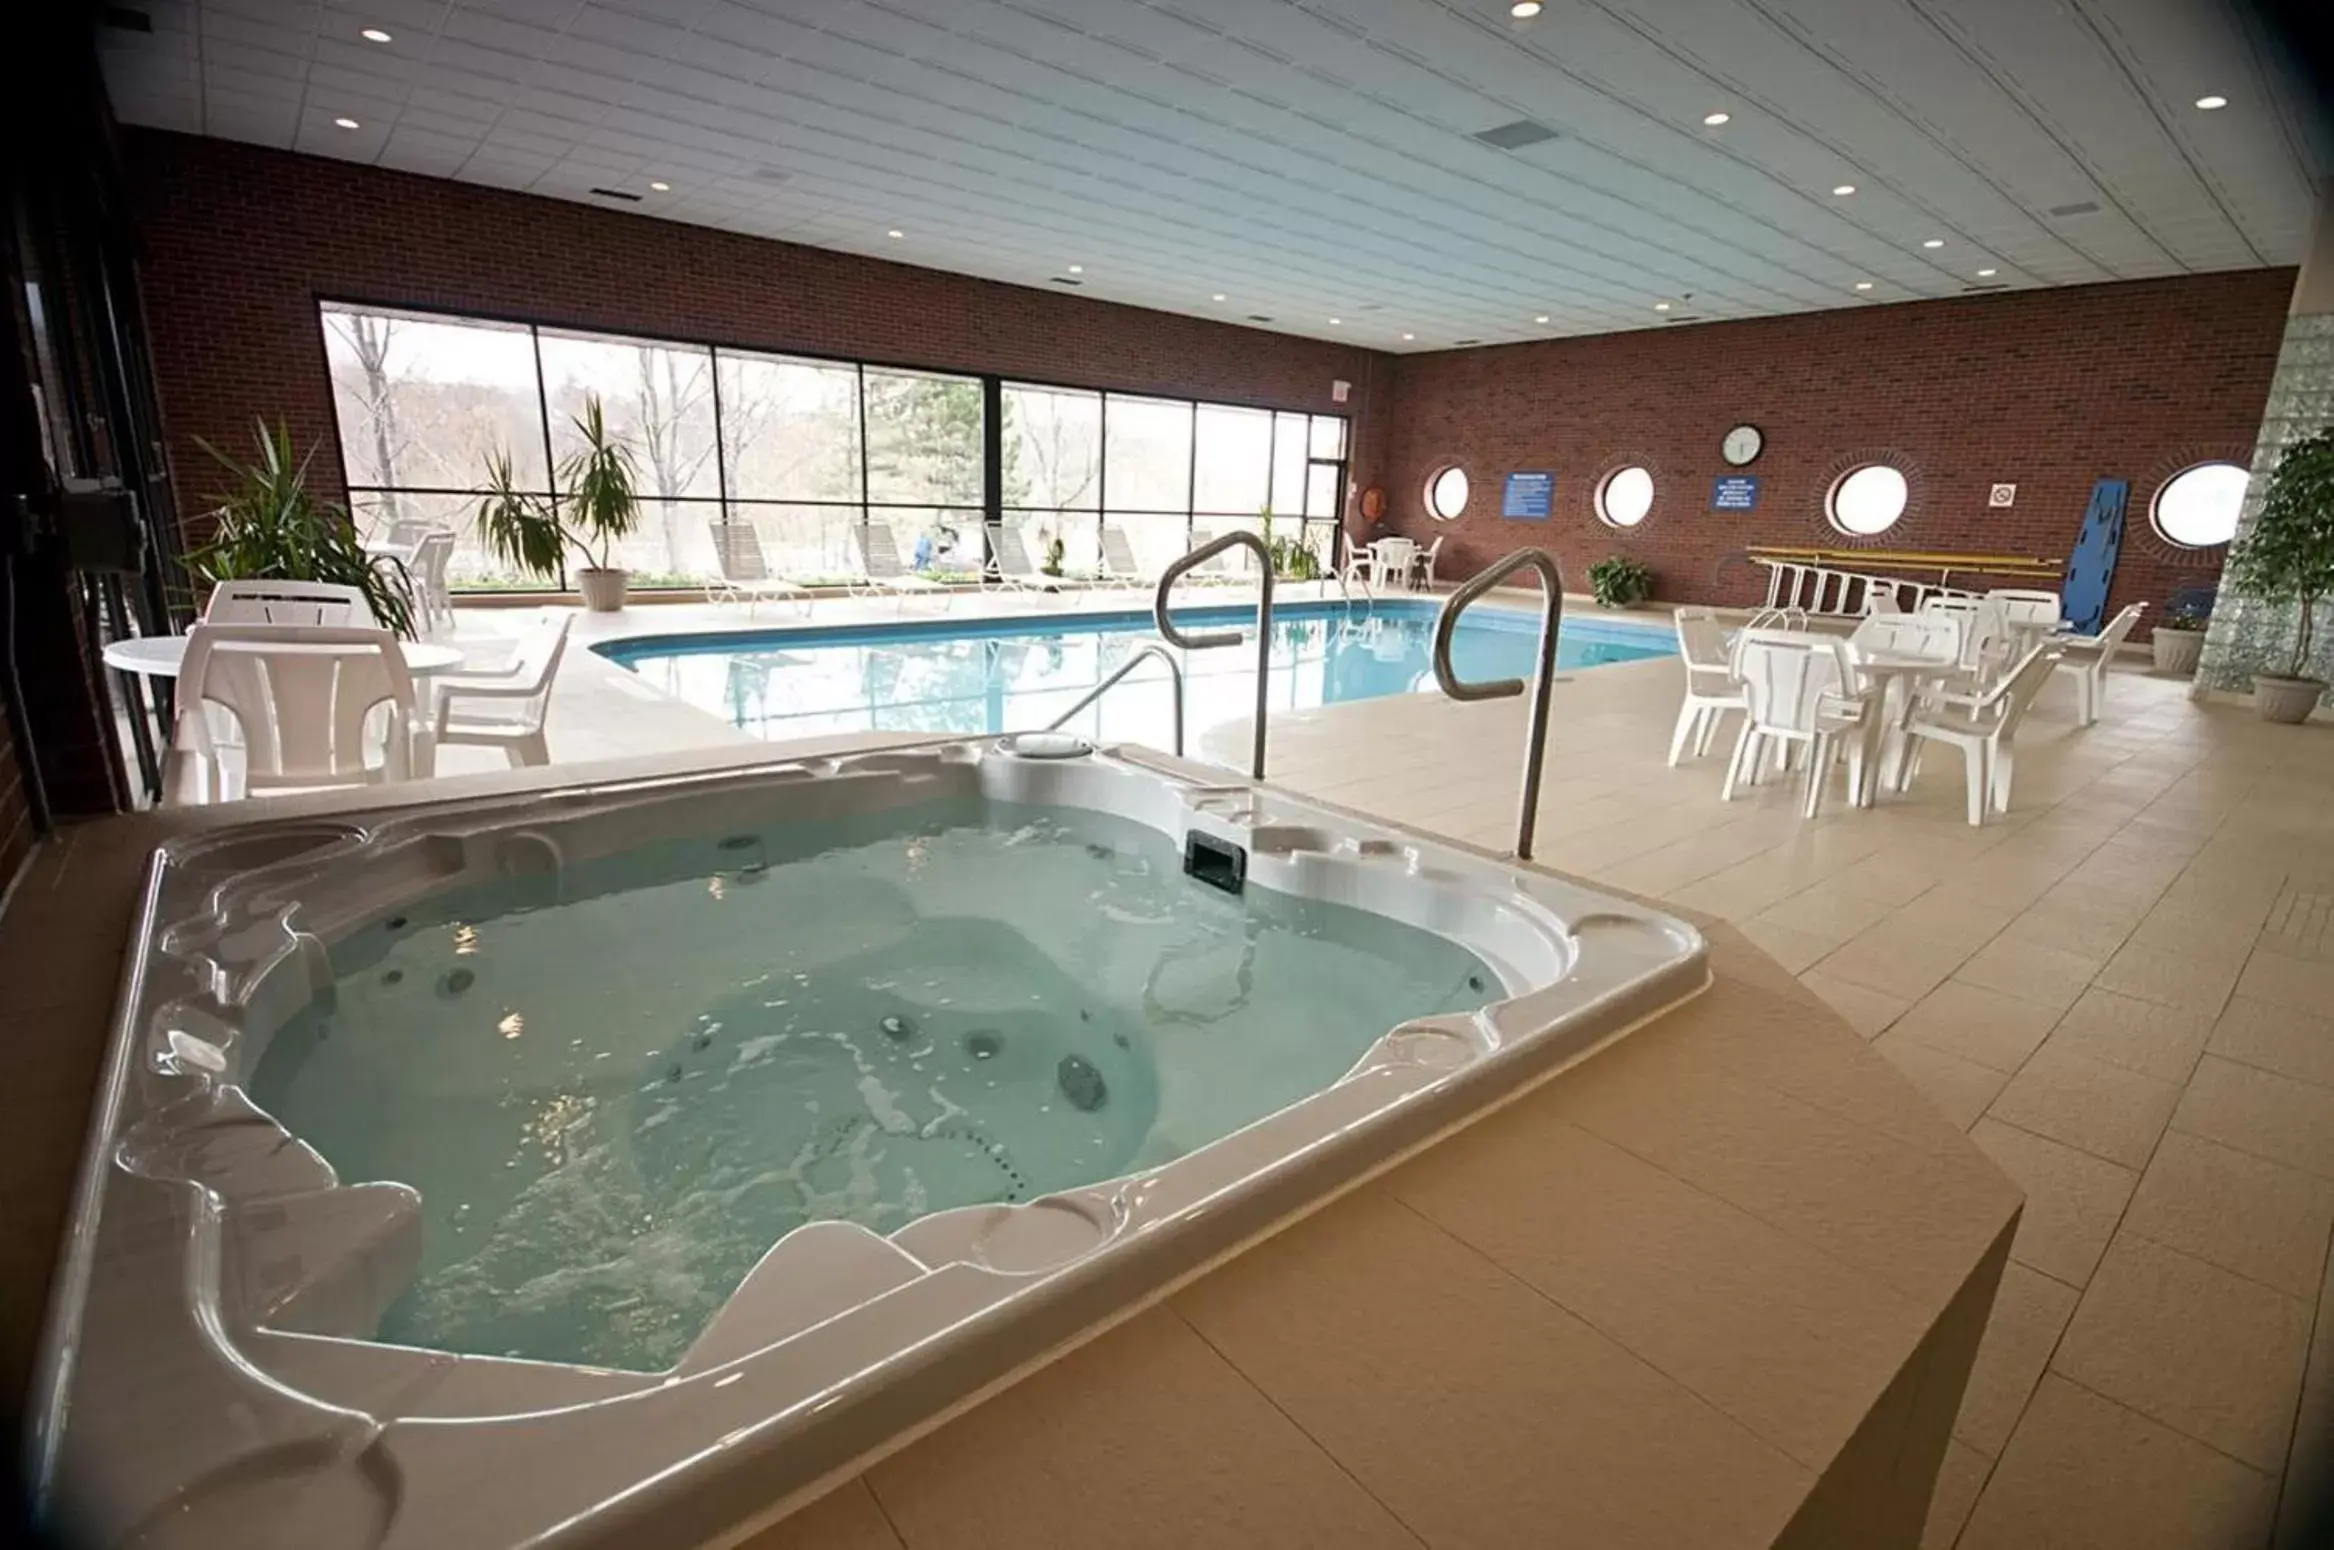 Hot Tub, Swimming Pool in Visitor's Inn